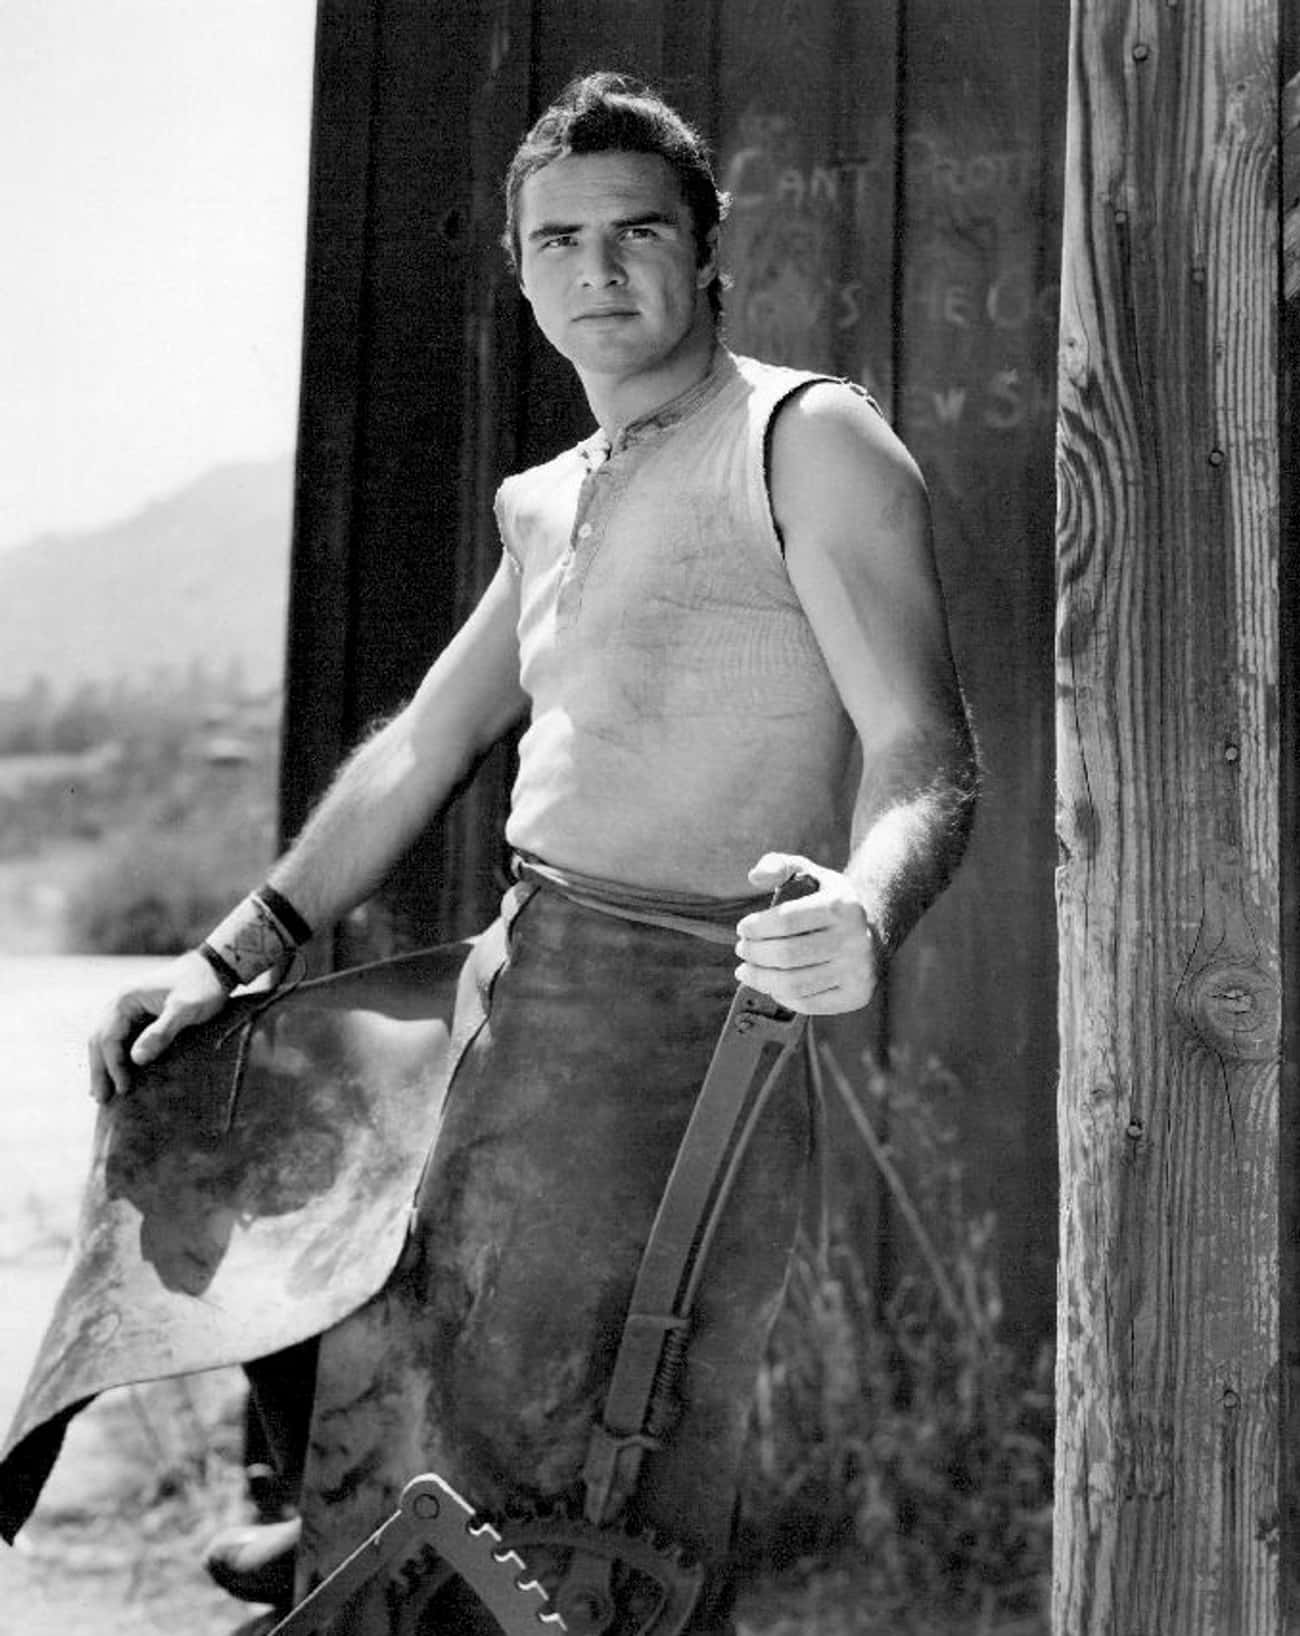 Young Burt Reynolds in a Sleevelss Shirt